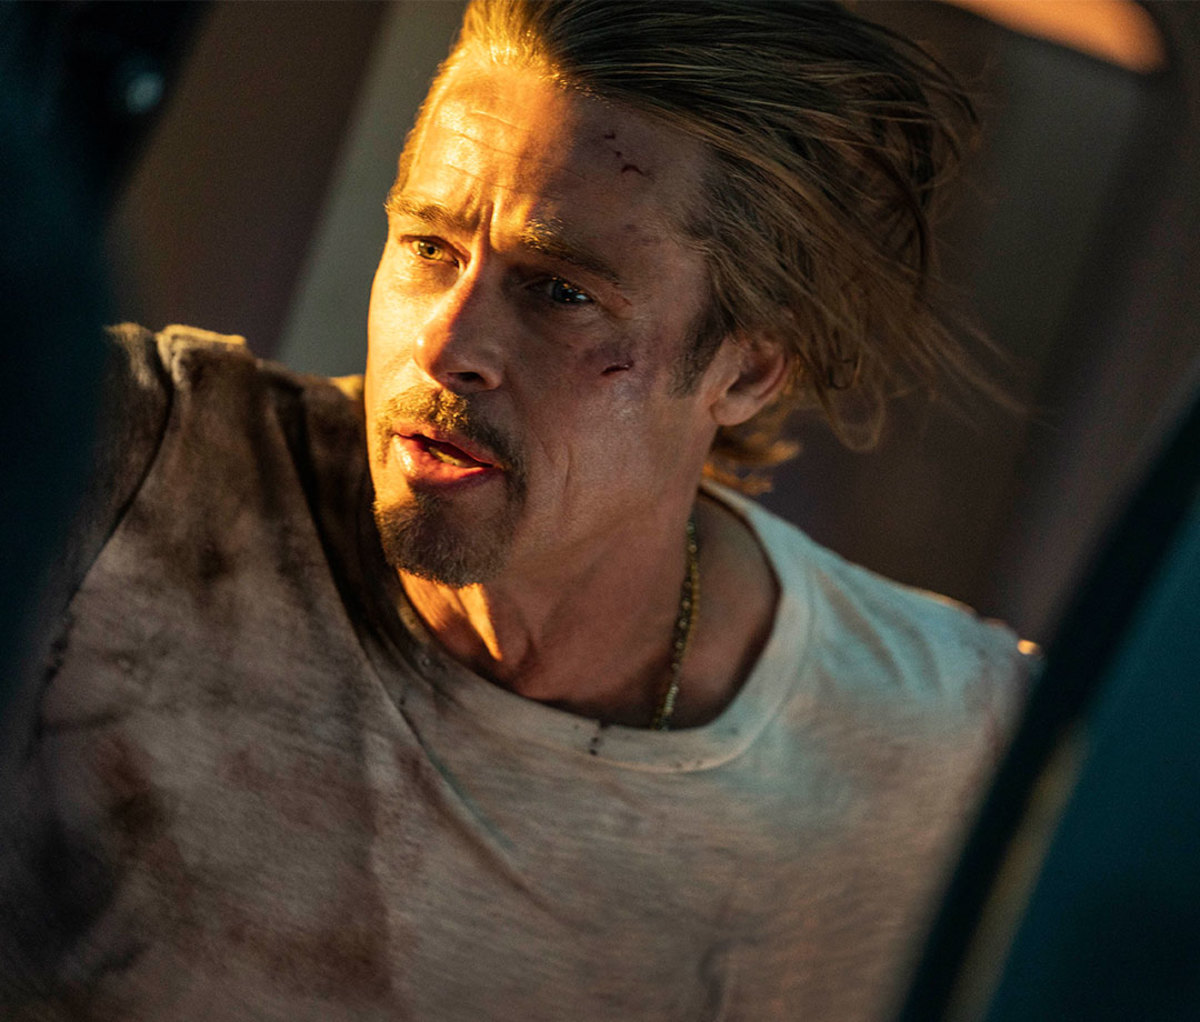 Actor Brad Pitt on speeding train